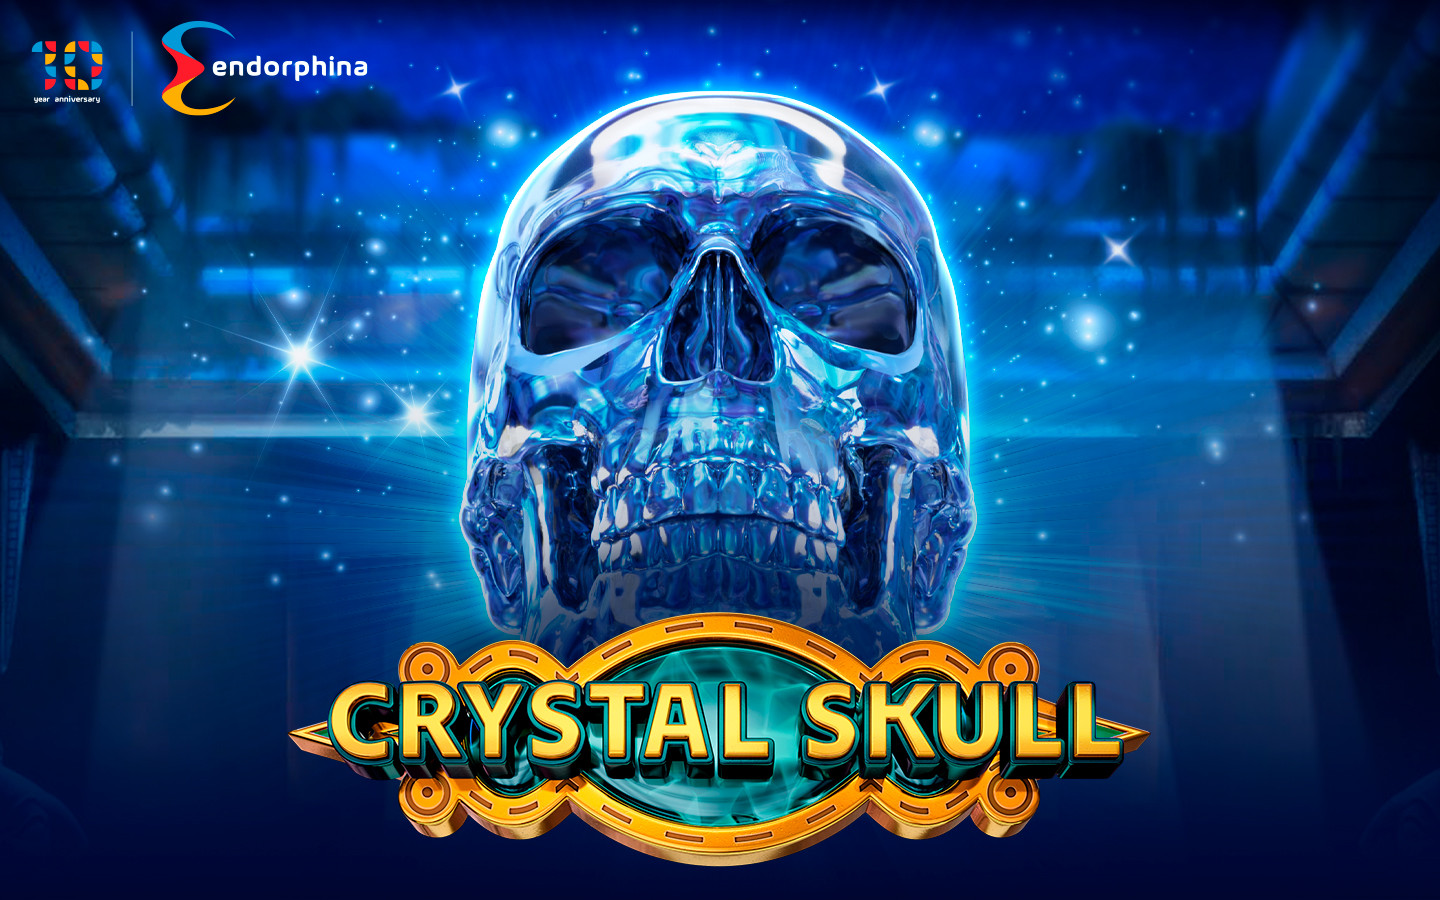 CASINO PROVIDERS 2022 | New slot game release Crystal Skull